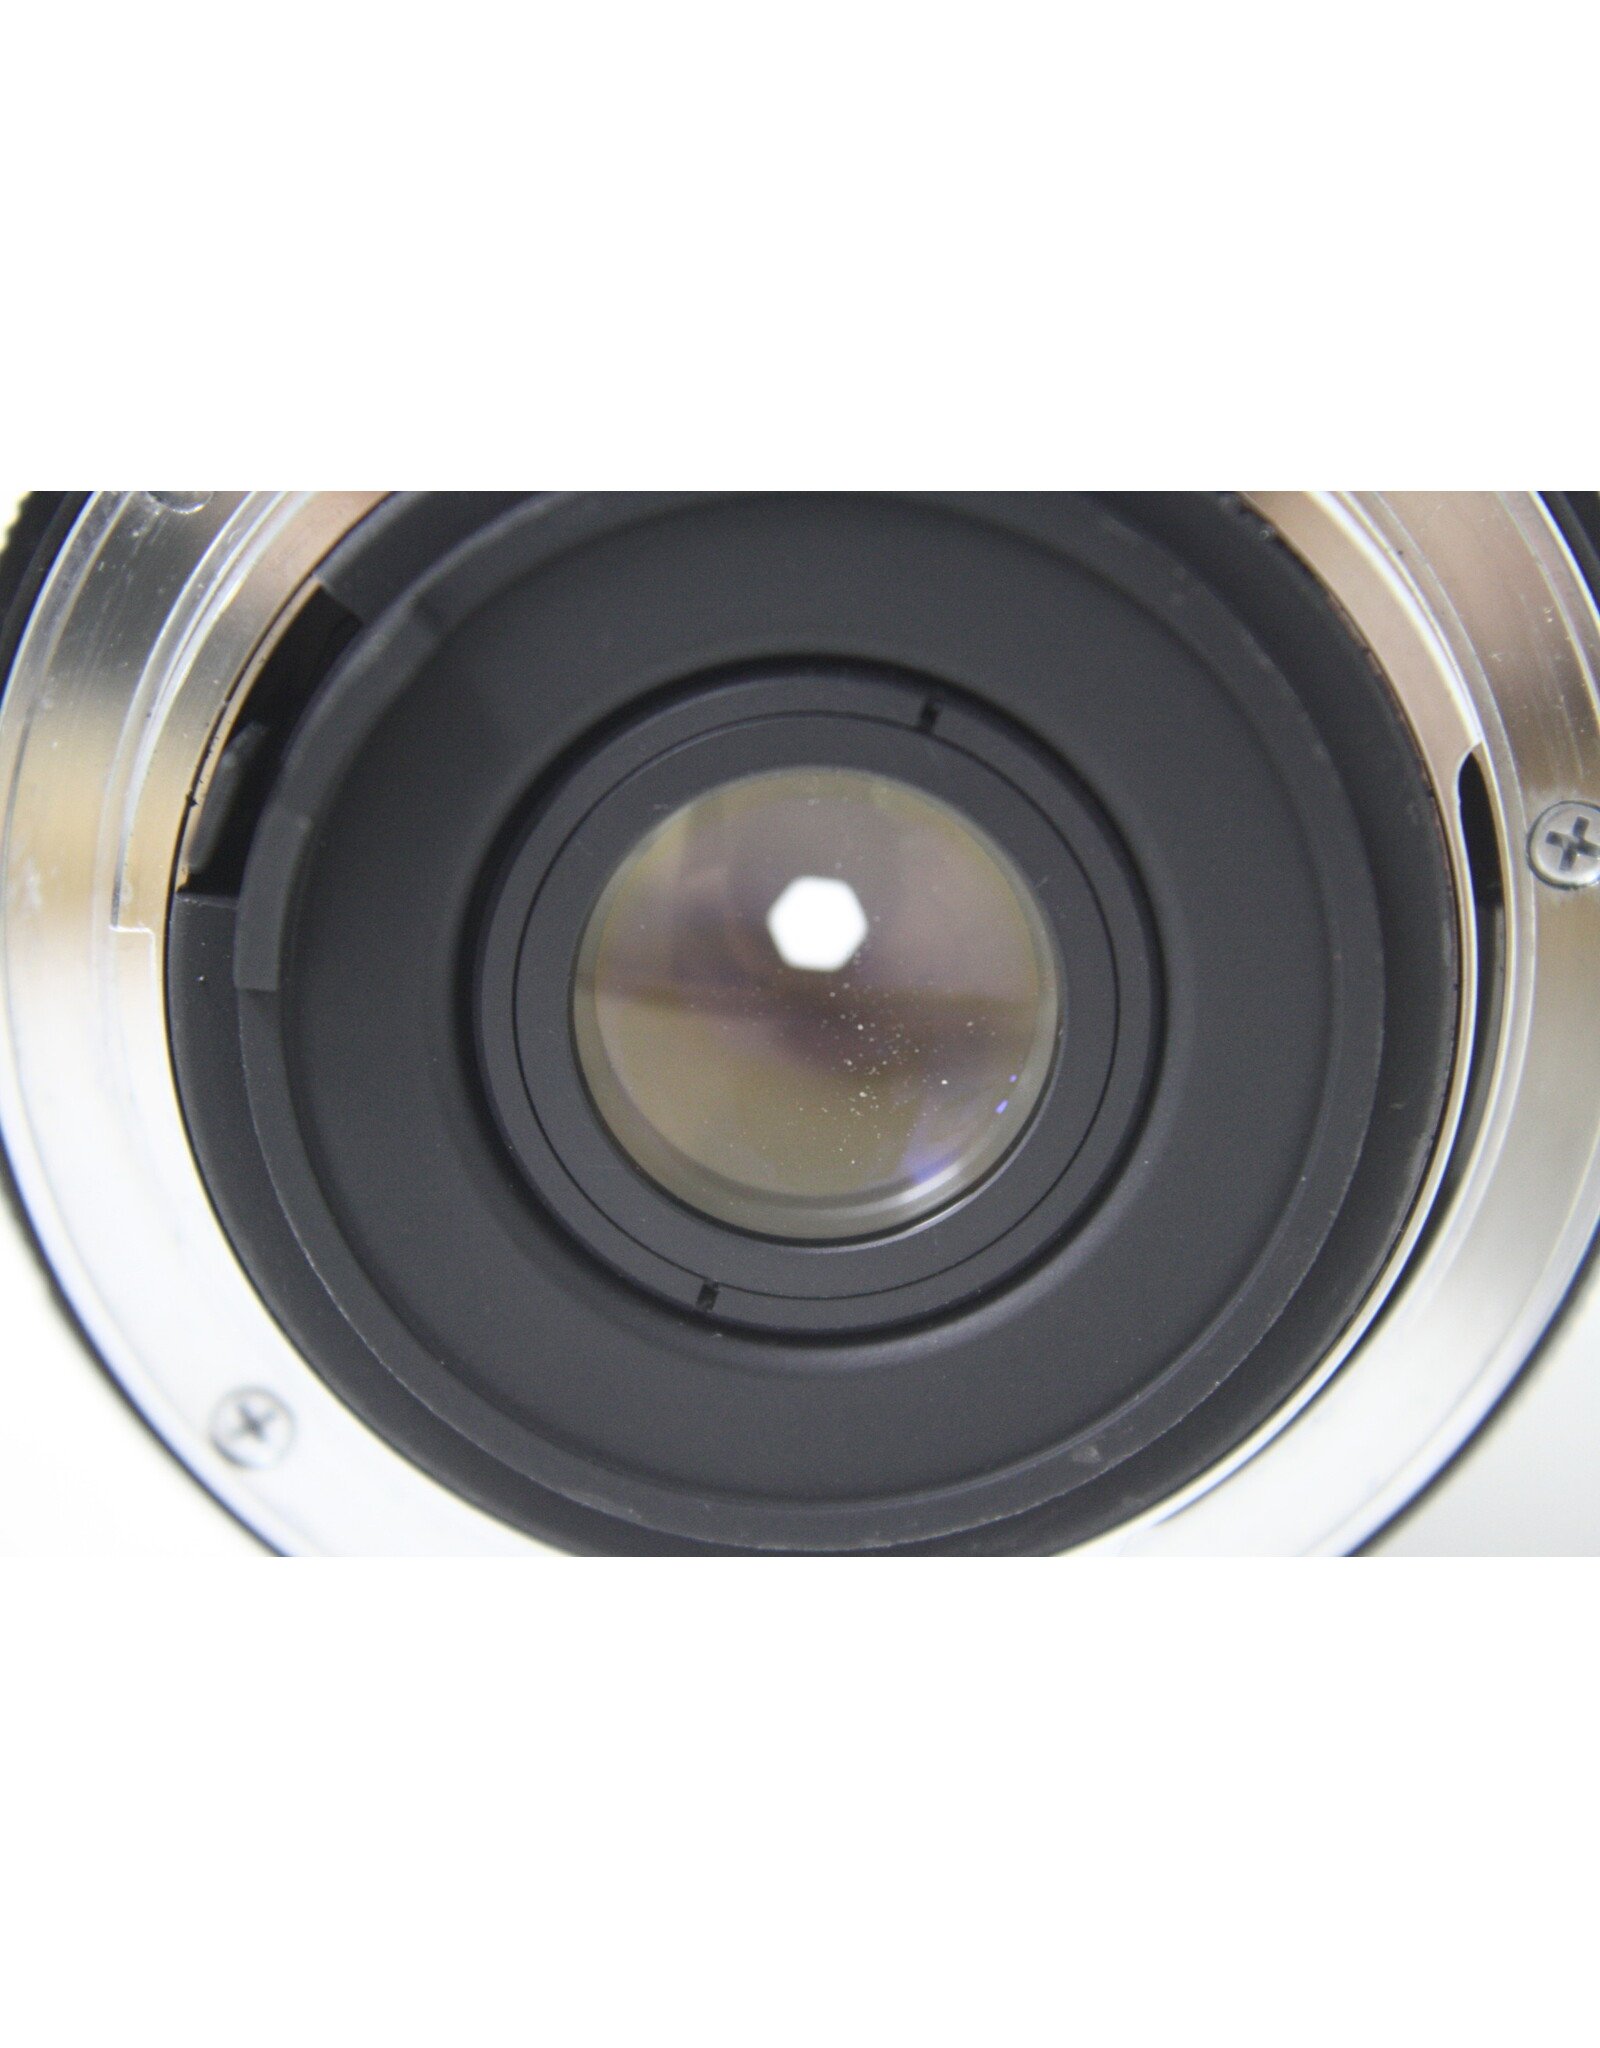 Vivitar Vivitar 28mm 2.8 MC Close Focus WA Lens  for Pen K Mount(Pre-owned)